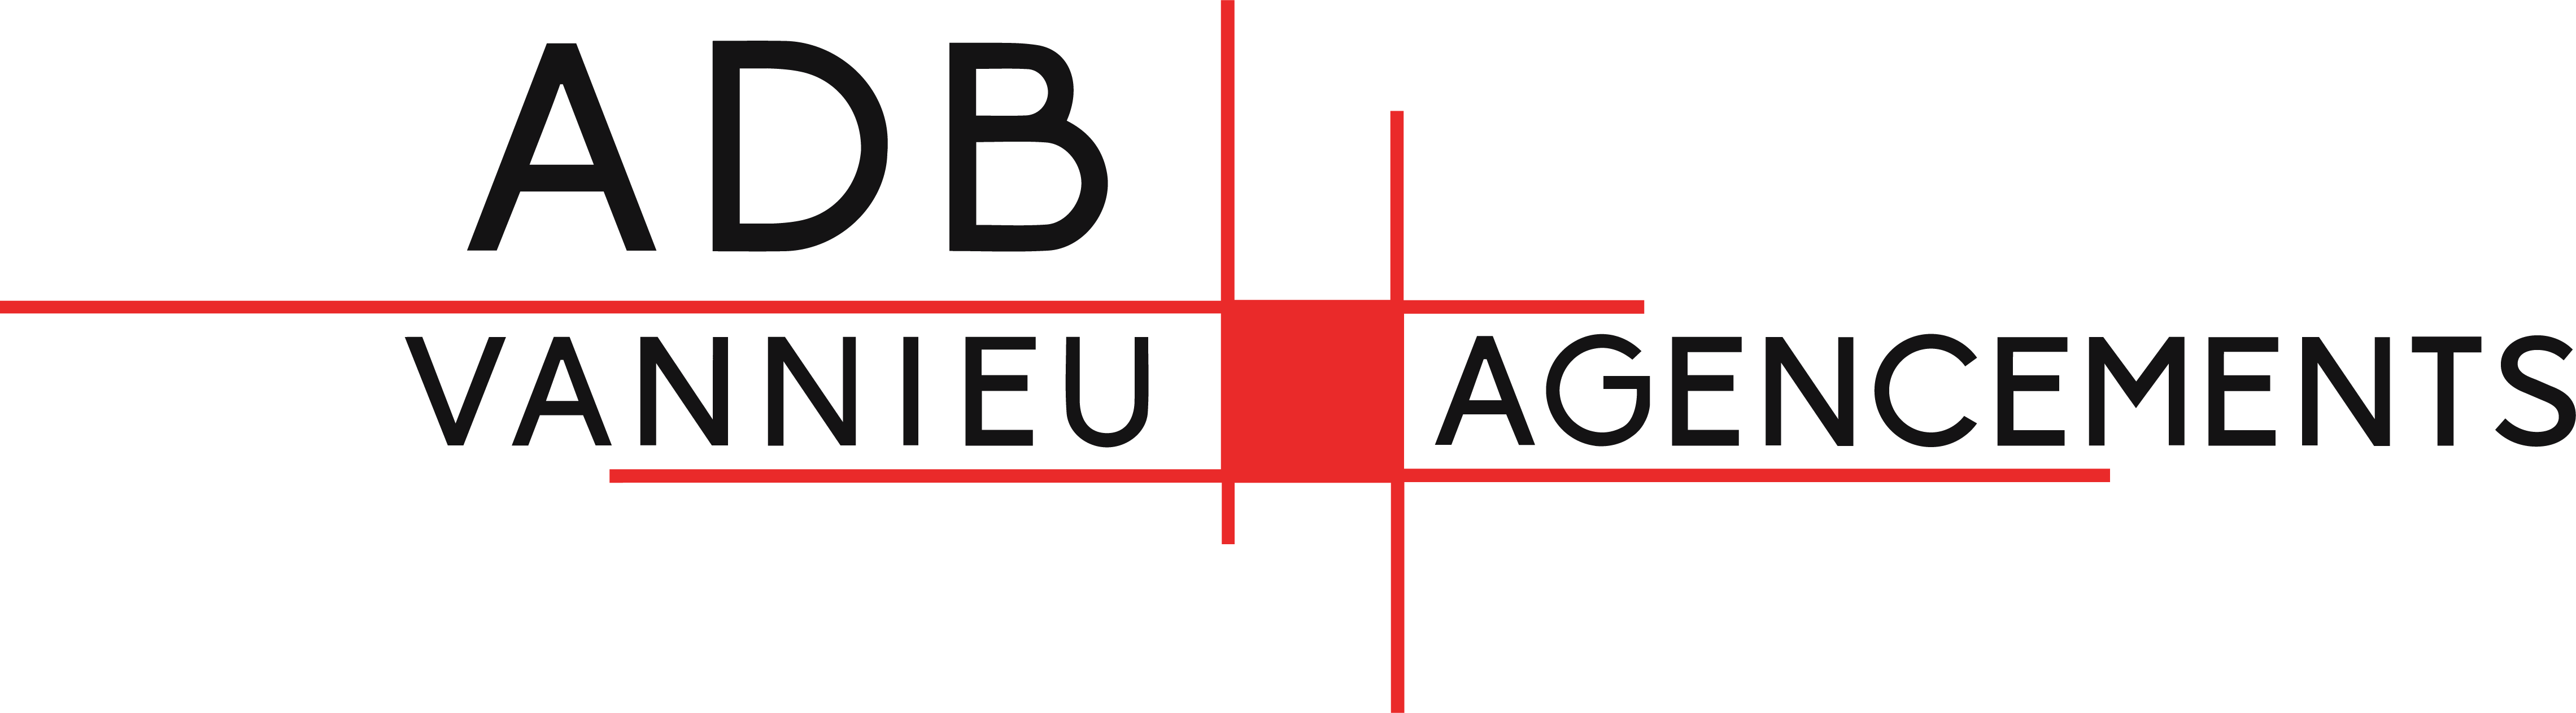 logo ADB Vannieu agencements